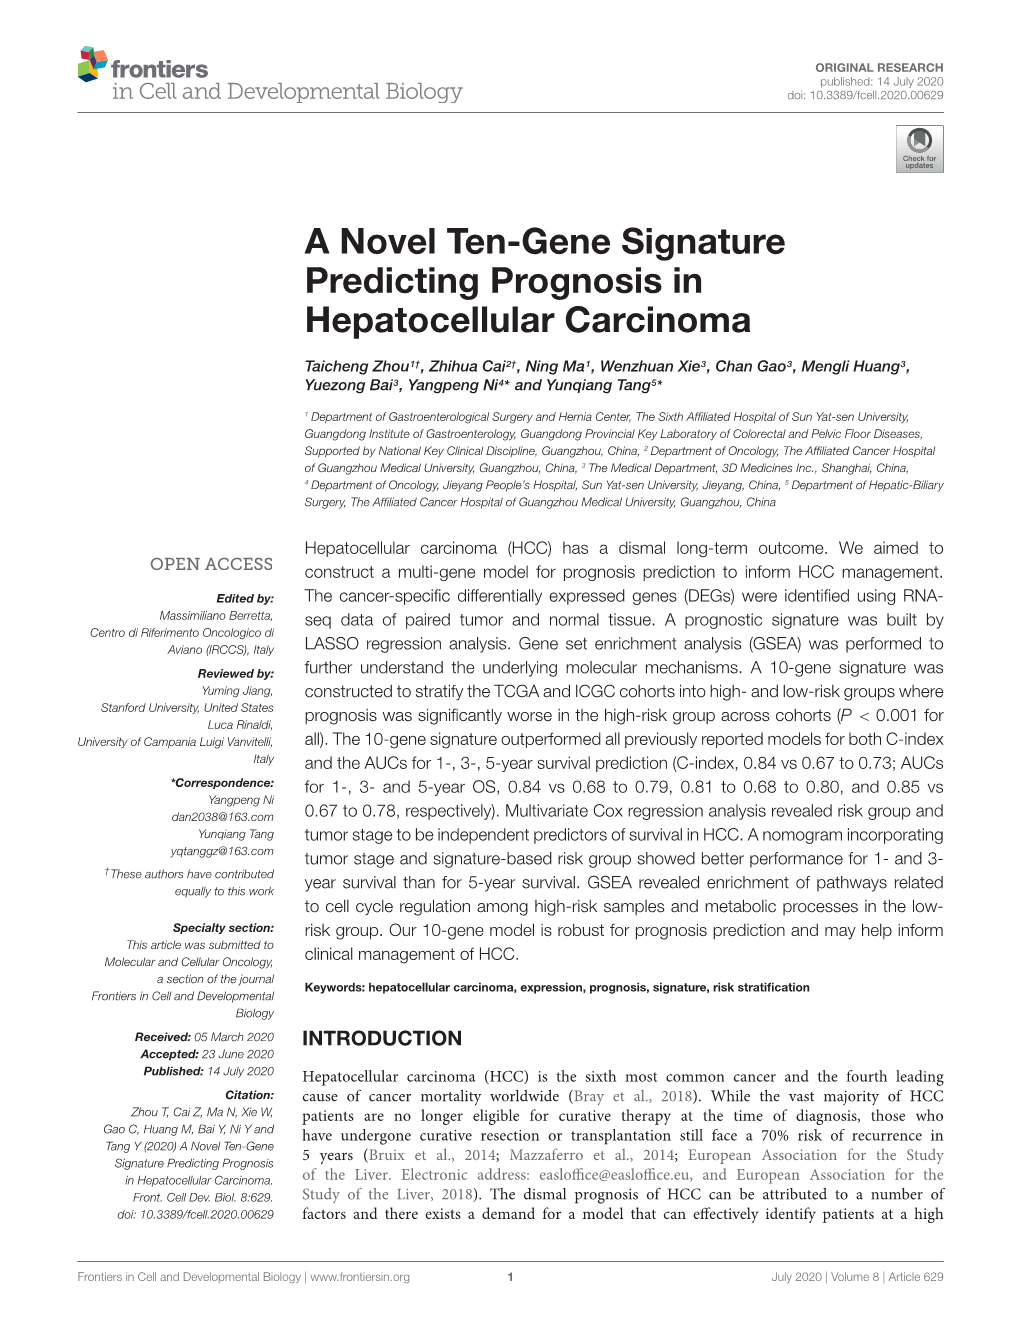 A Novel Ten-Gene Signature Predicting Prognosis in Hepatocellular Carcinoma